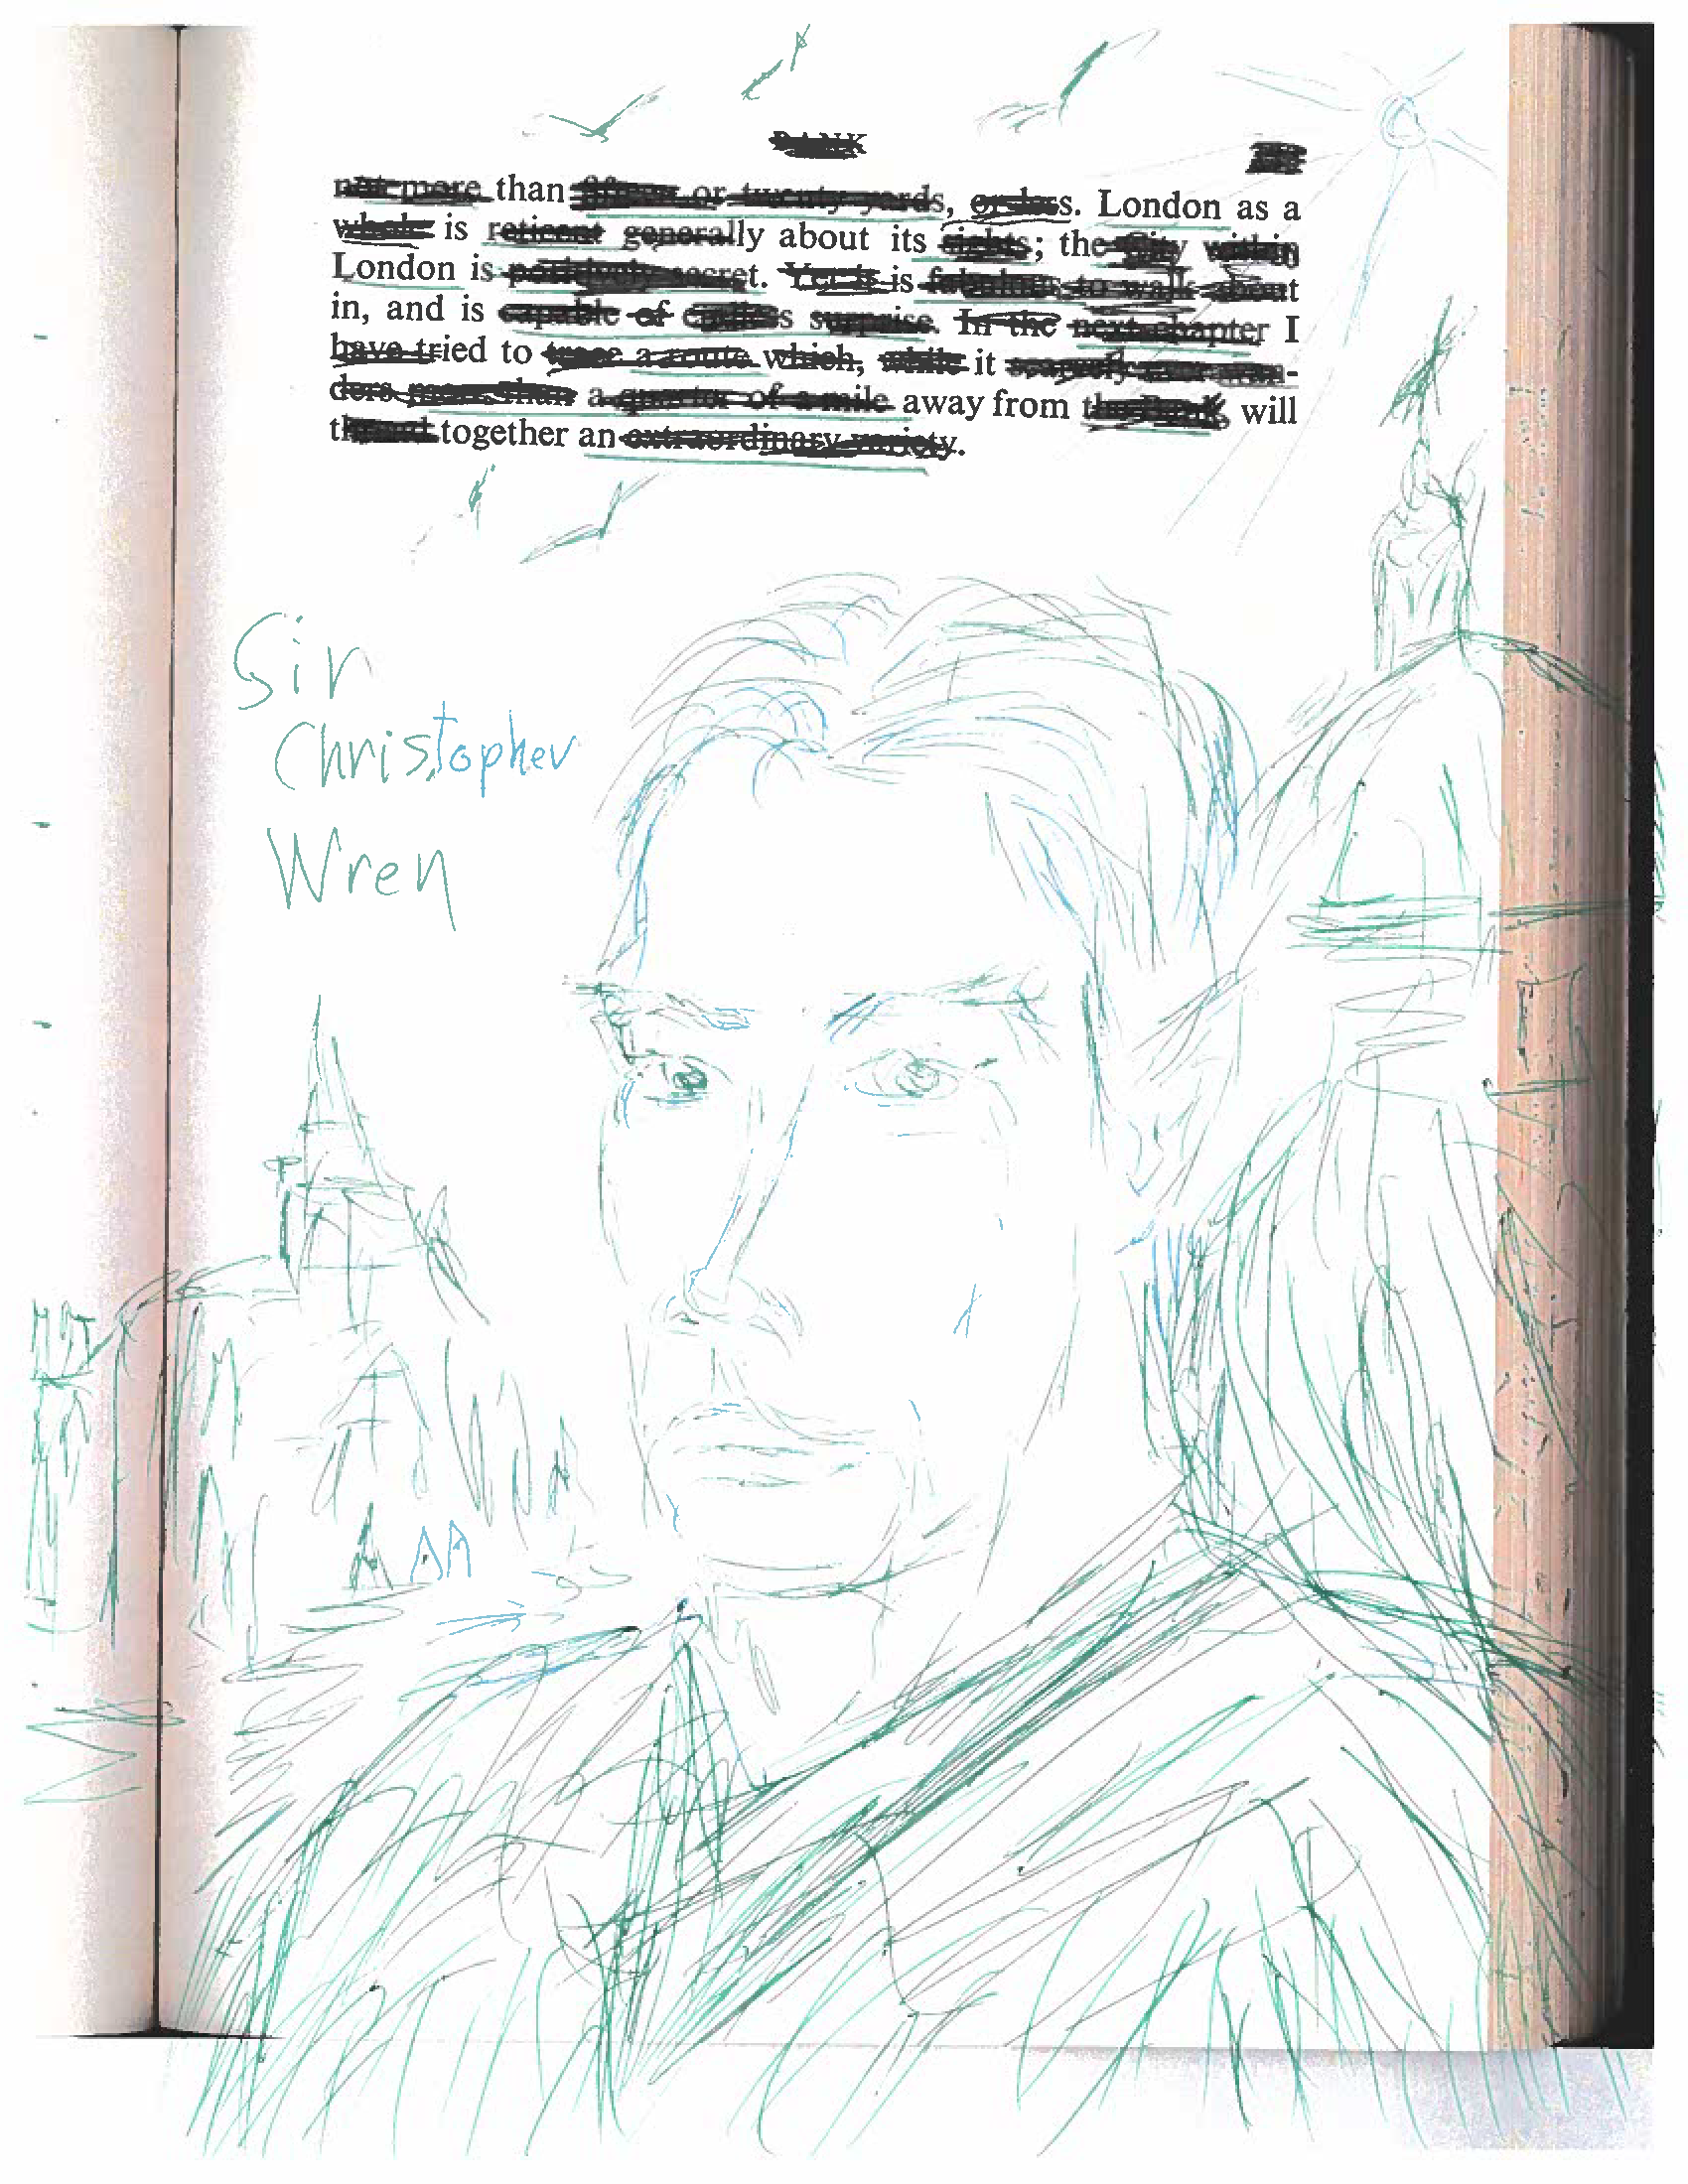 Portrait of Christopher Wren